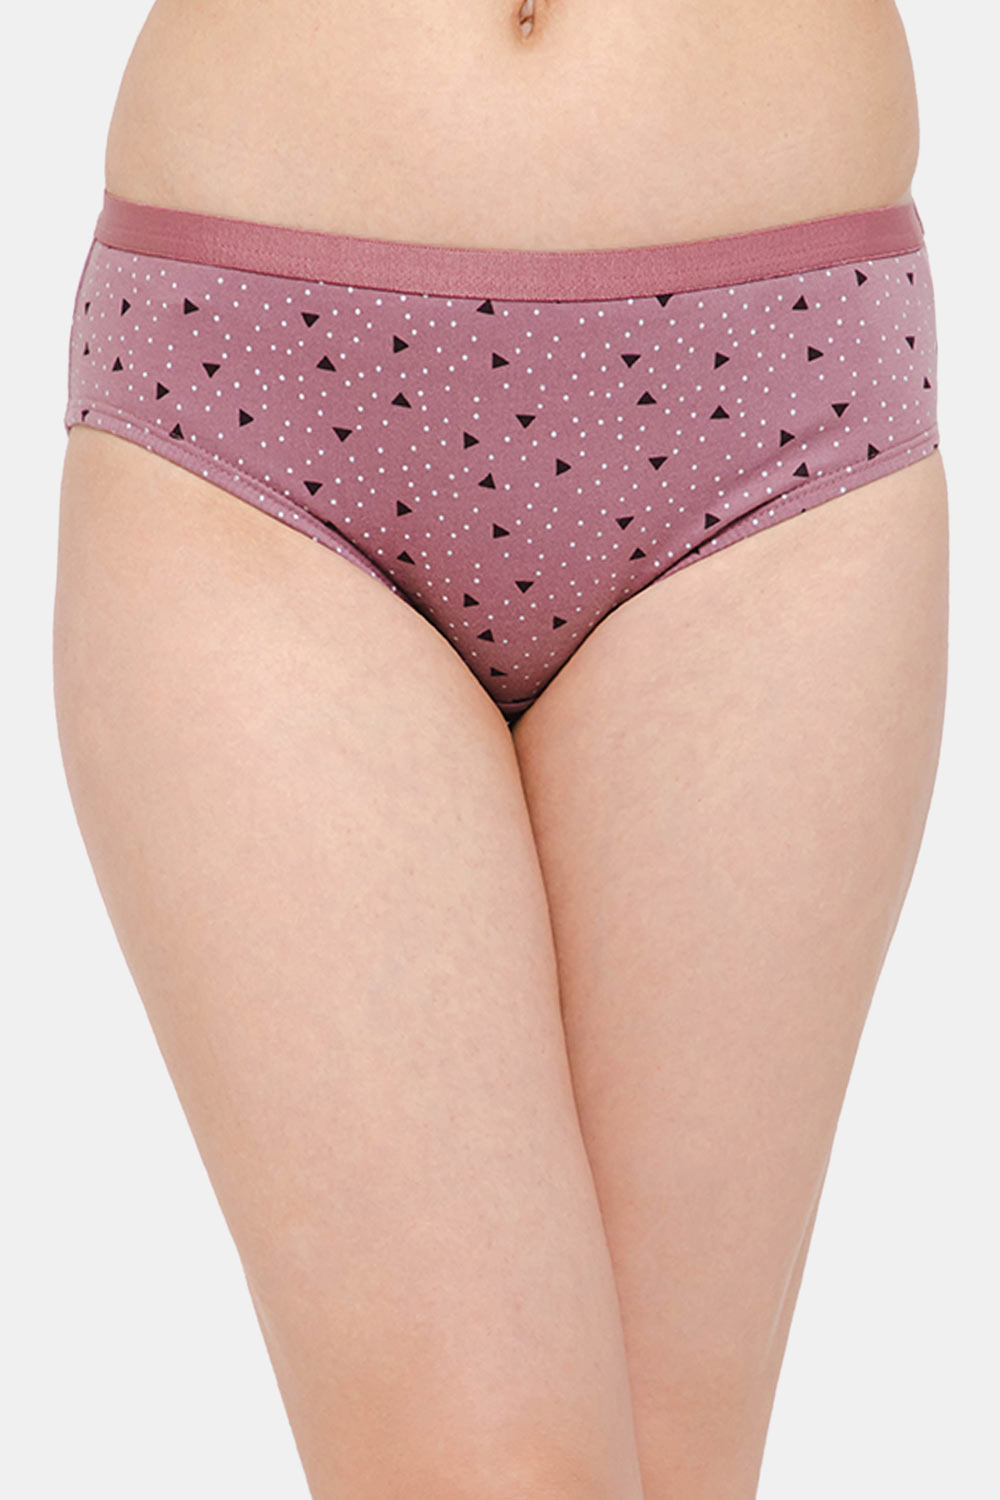 Sweat Absorbent Bikini Dark Printed Cotton Panty - Outer Elastic - Pac